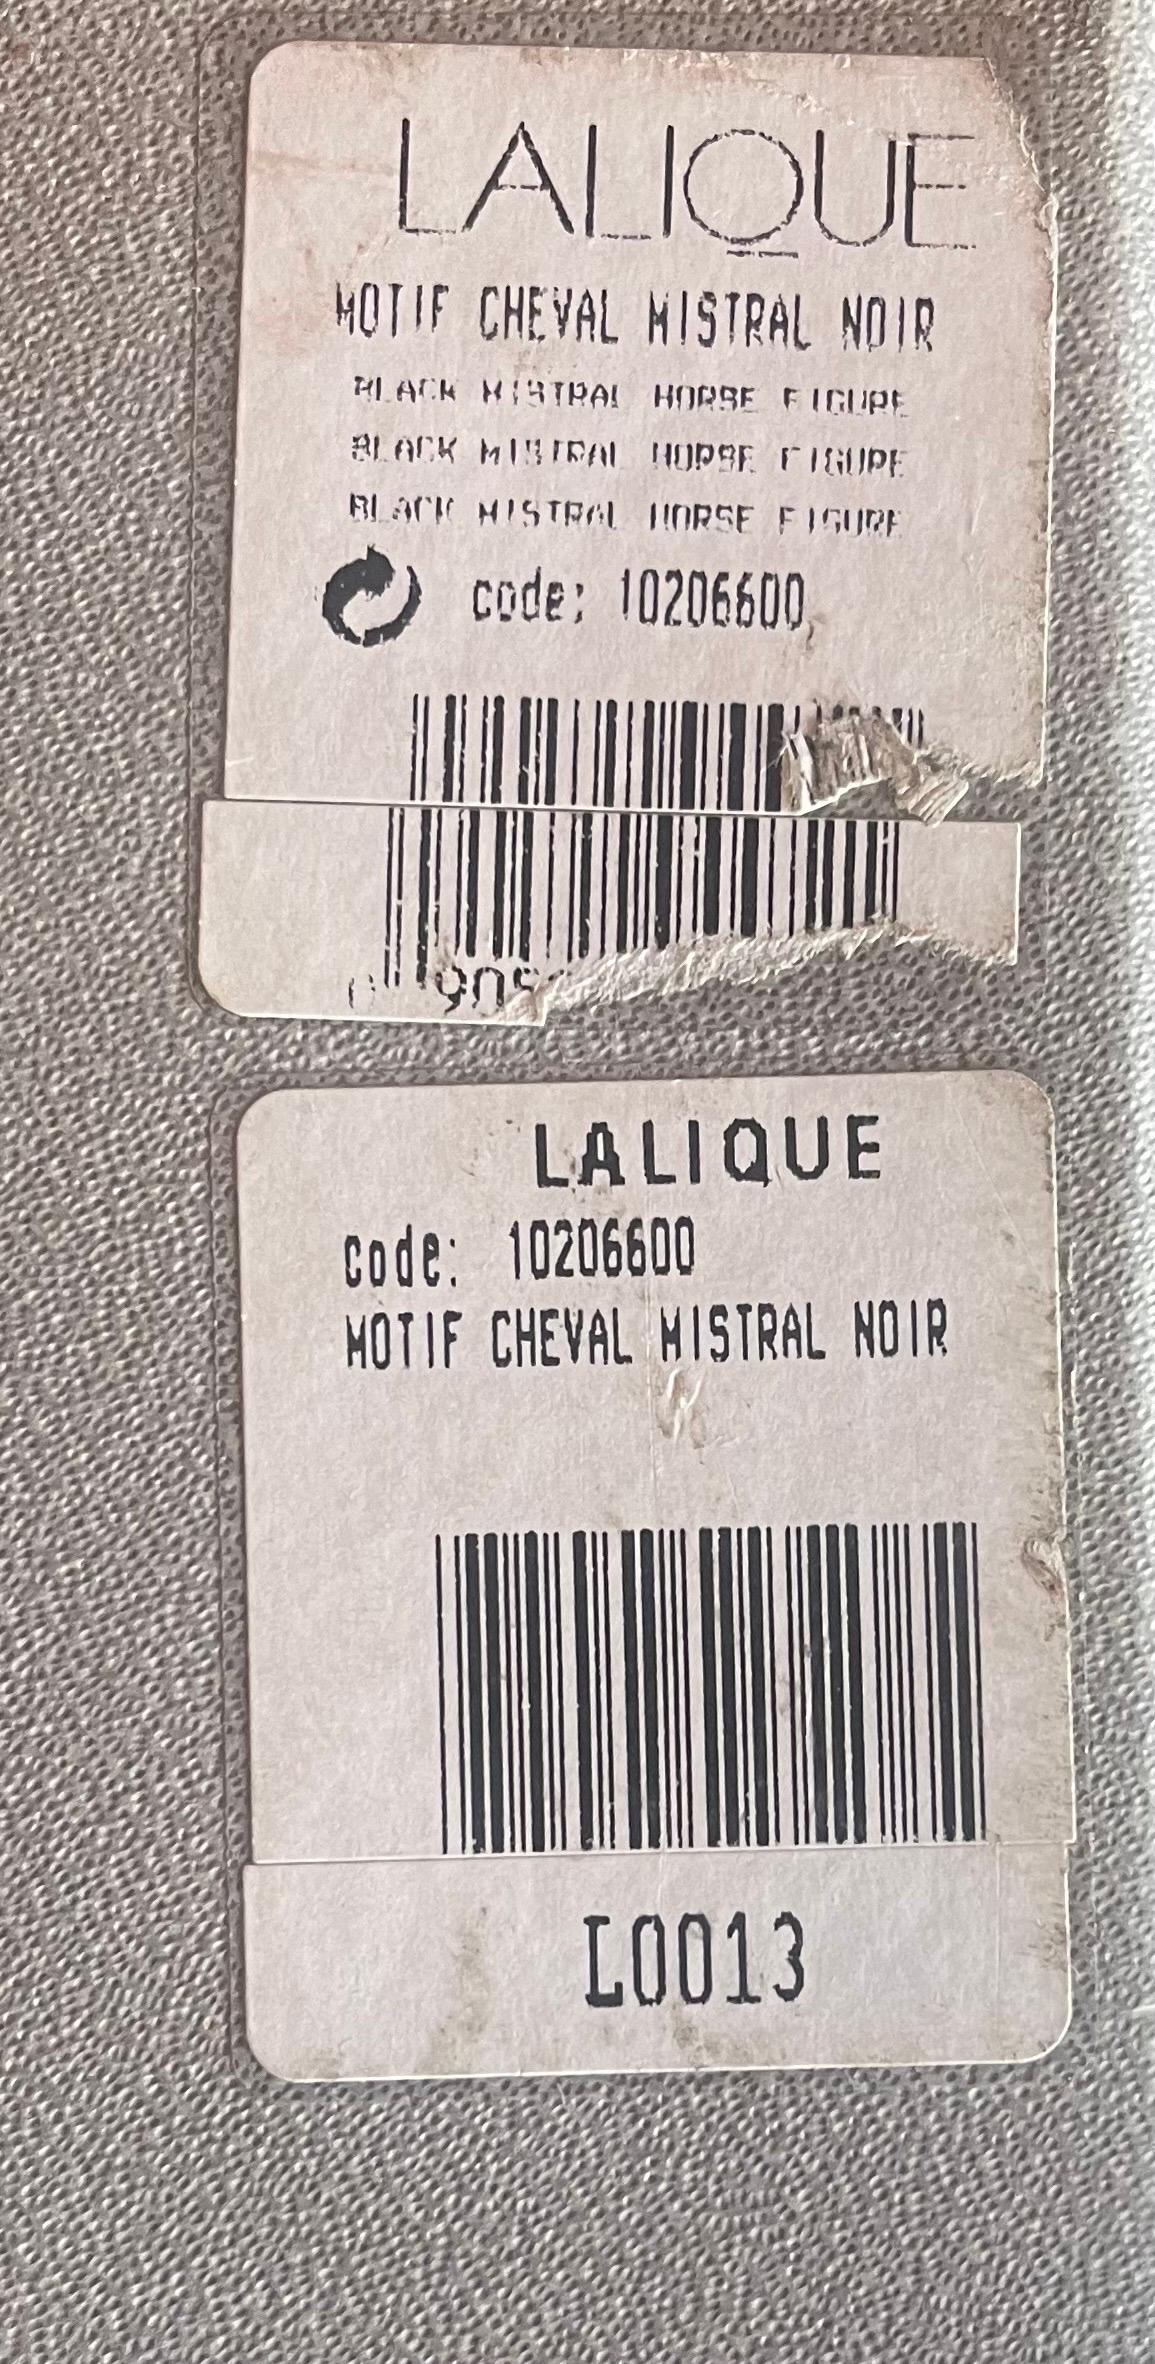 Rare Motif Cheval Mistral Noir Horse / Stallion Sculpture by Lalique of France For Sale 7